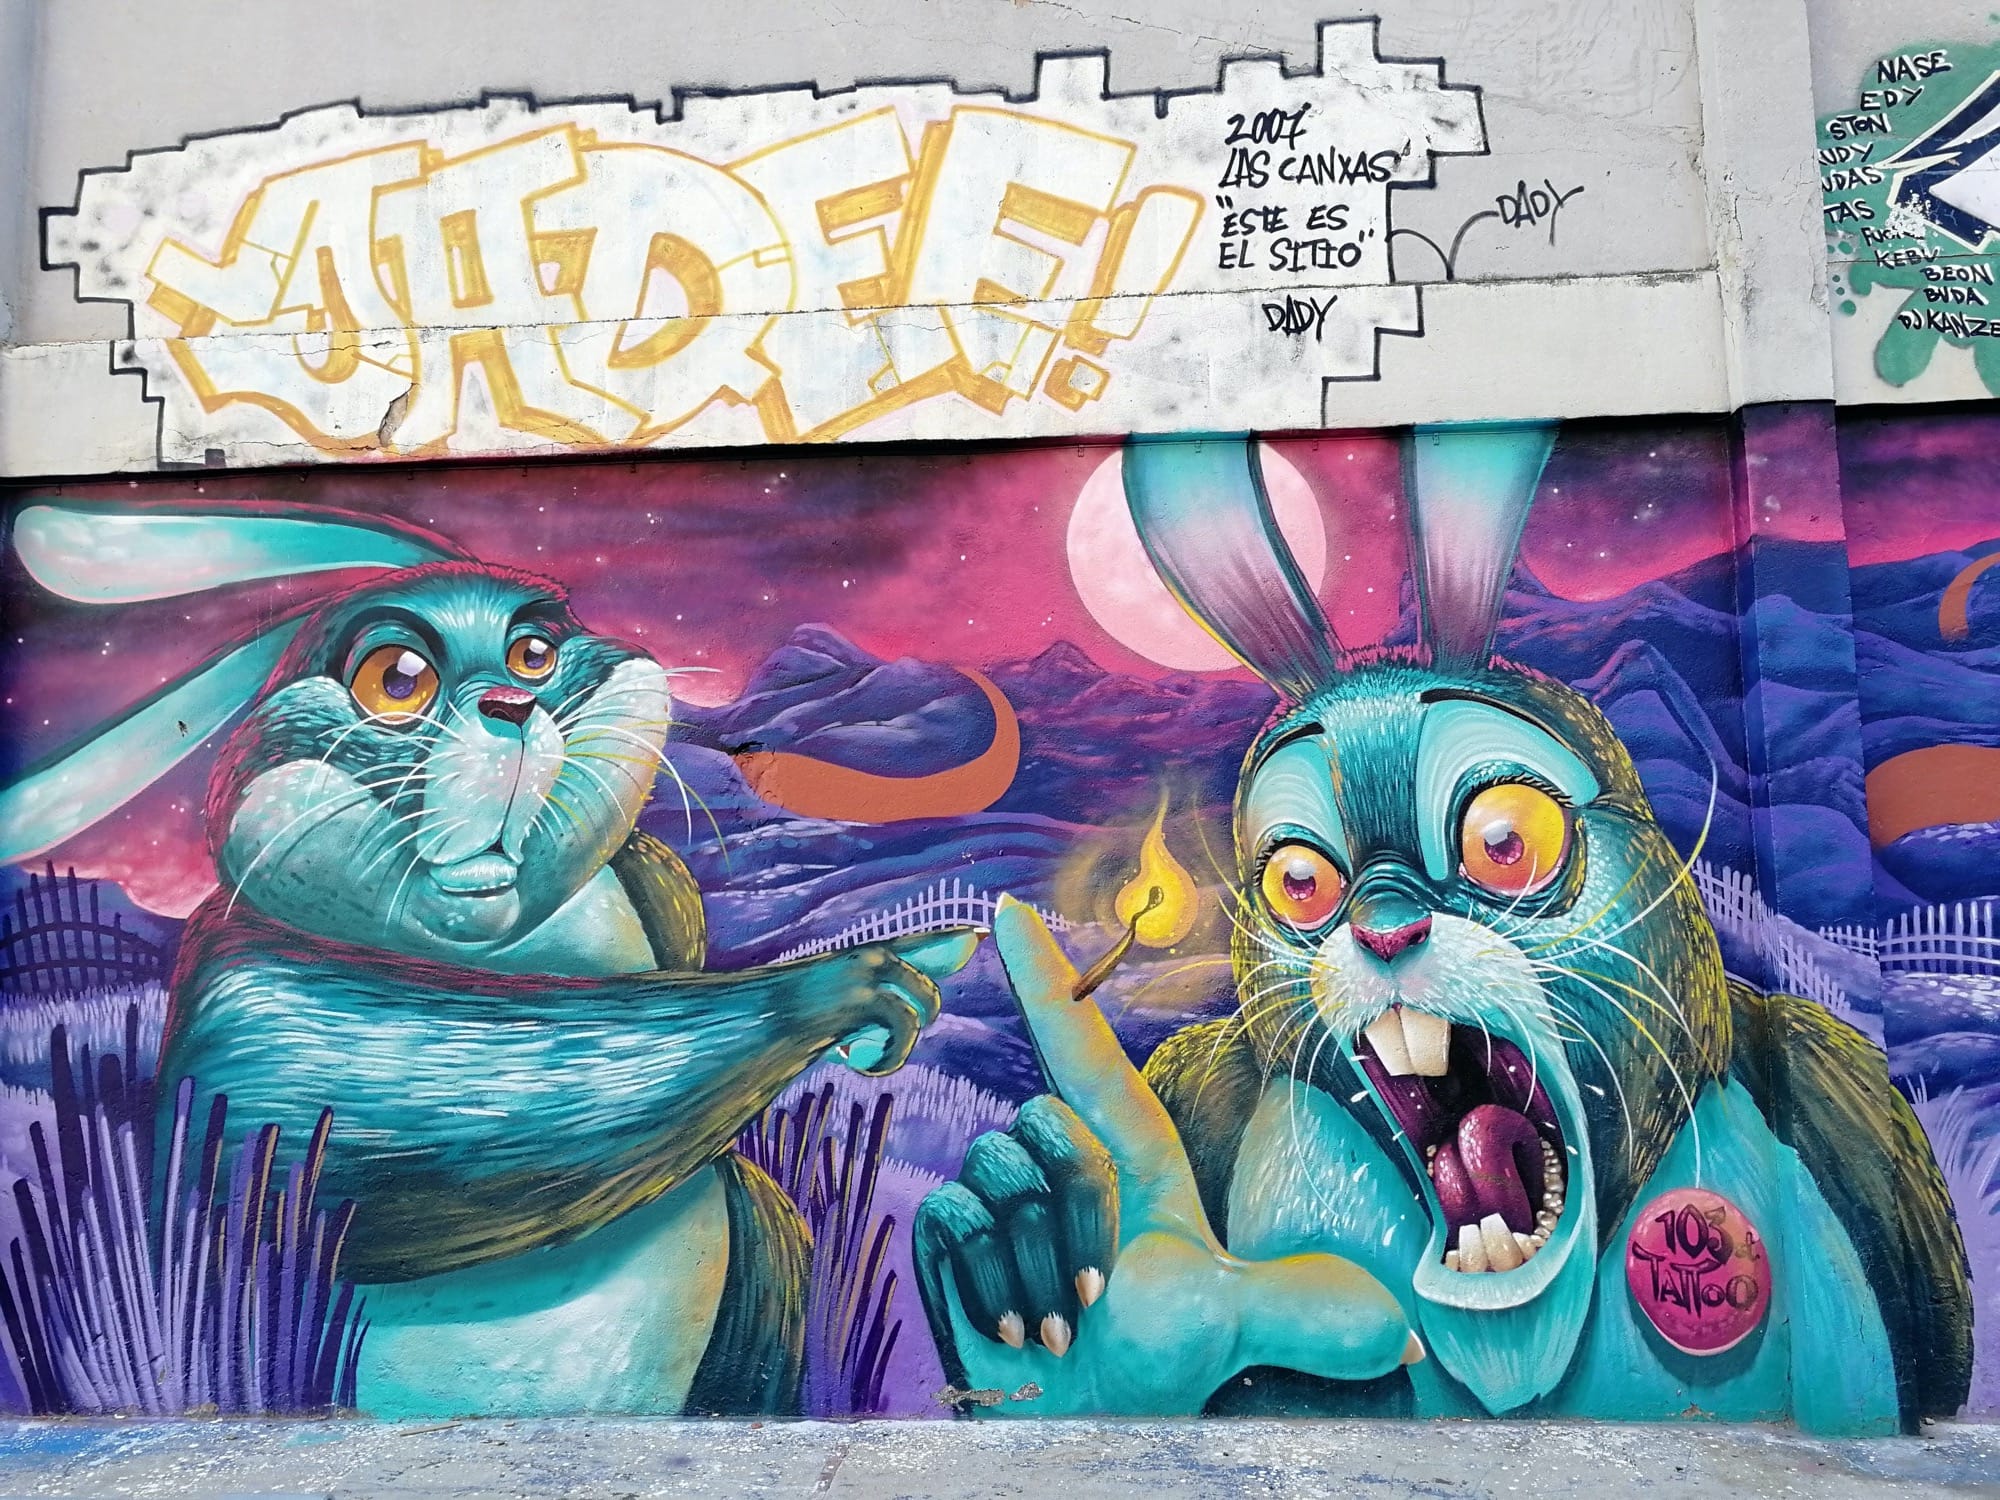 Graffiti 3685  by the artist Duke 103 captured by Rabot in València Spain